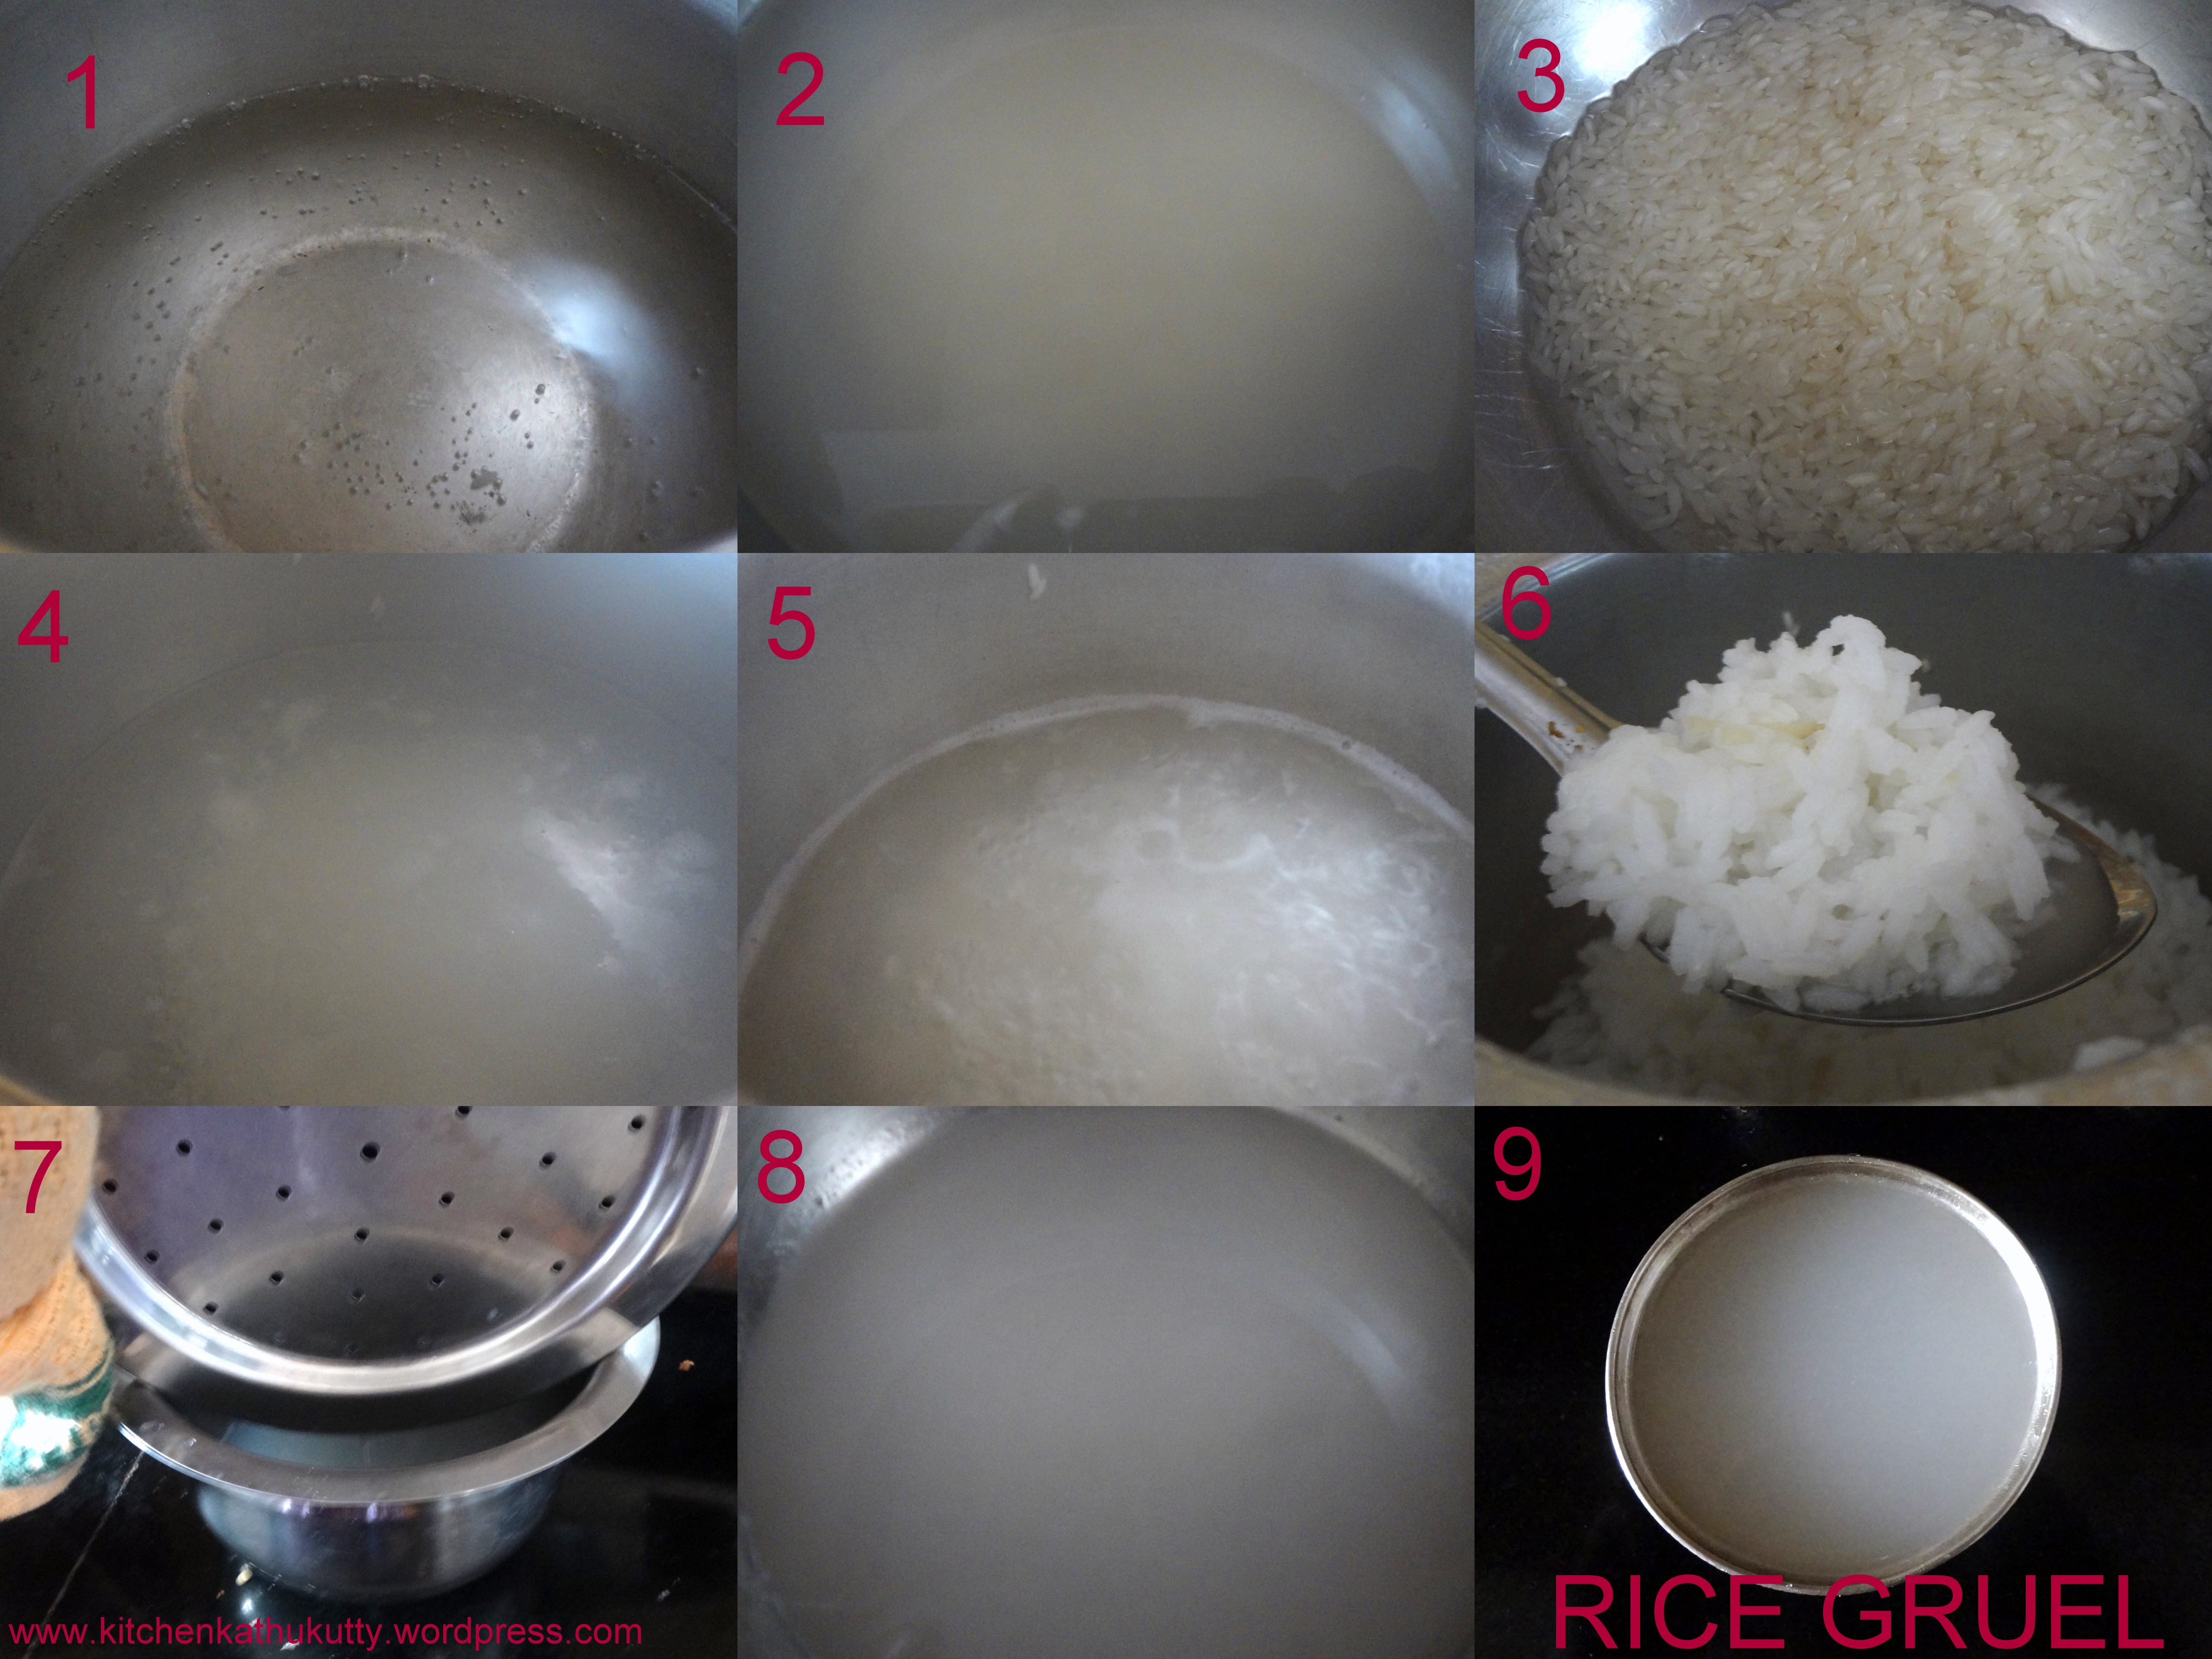 Rice gruel